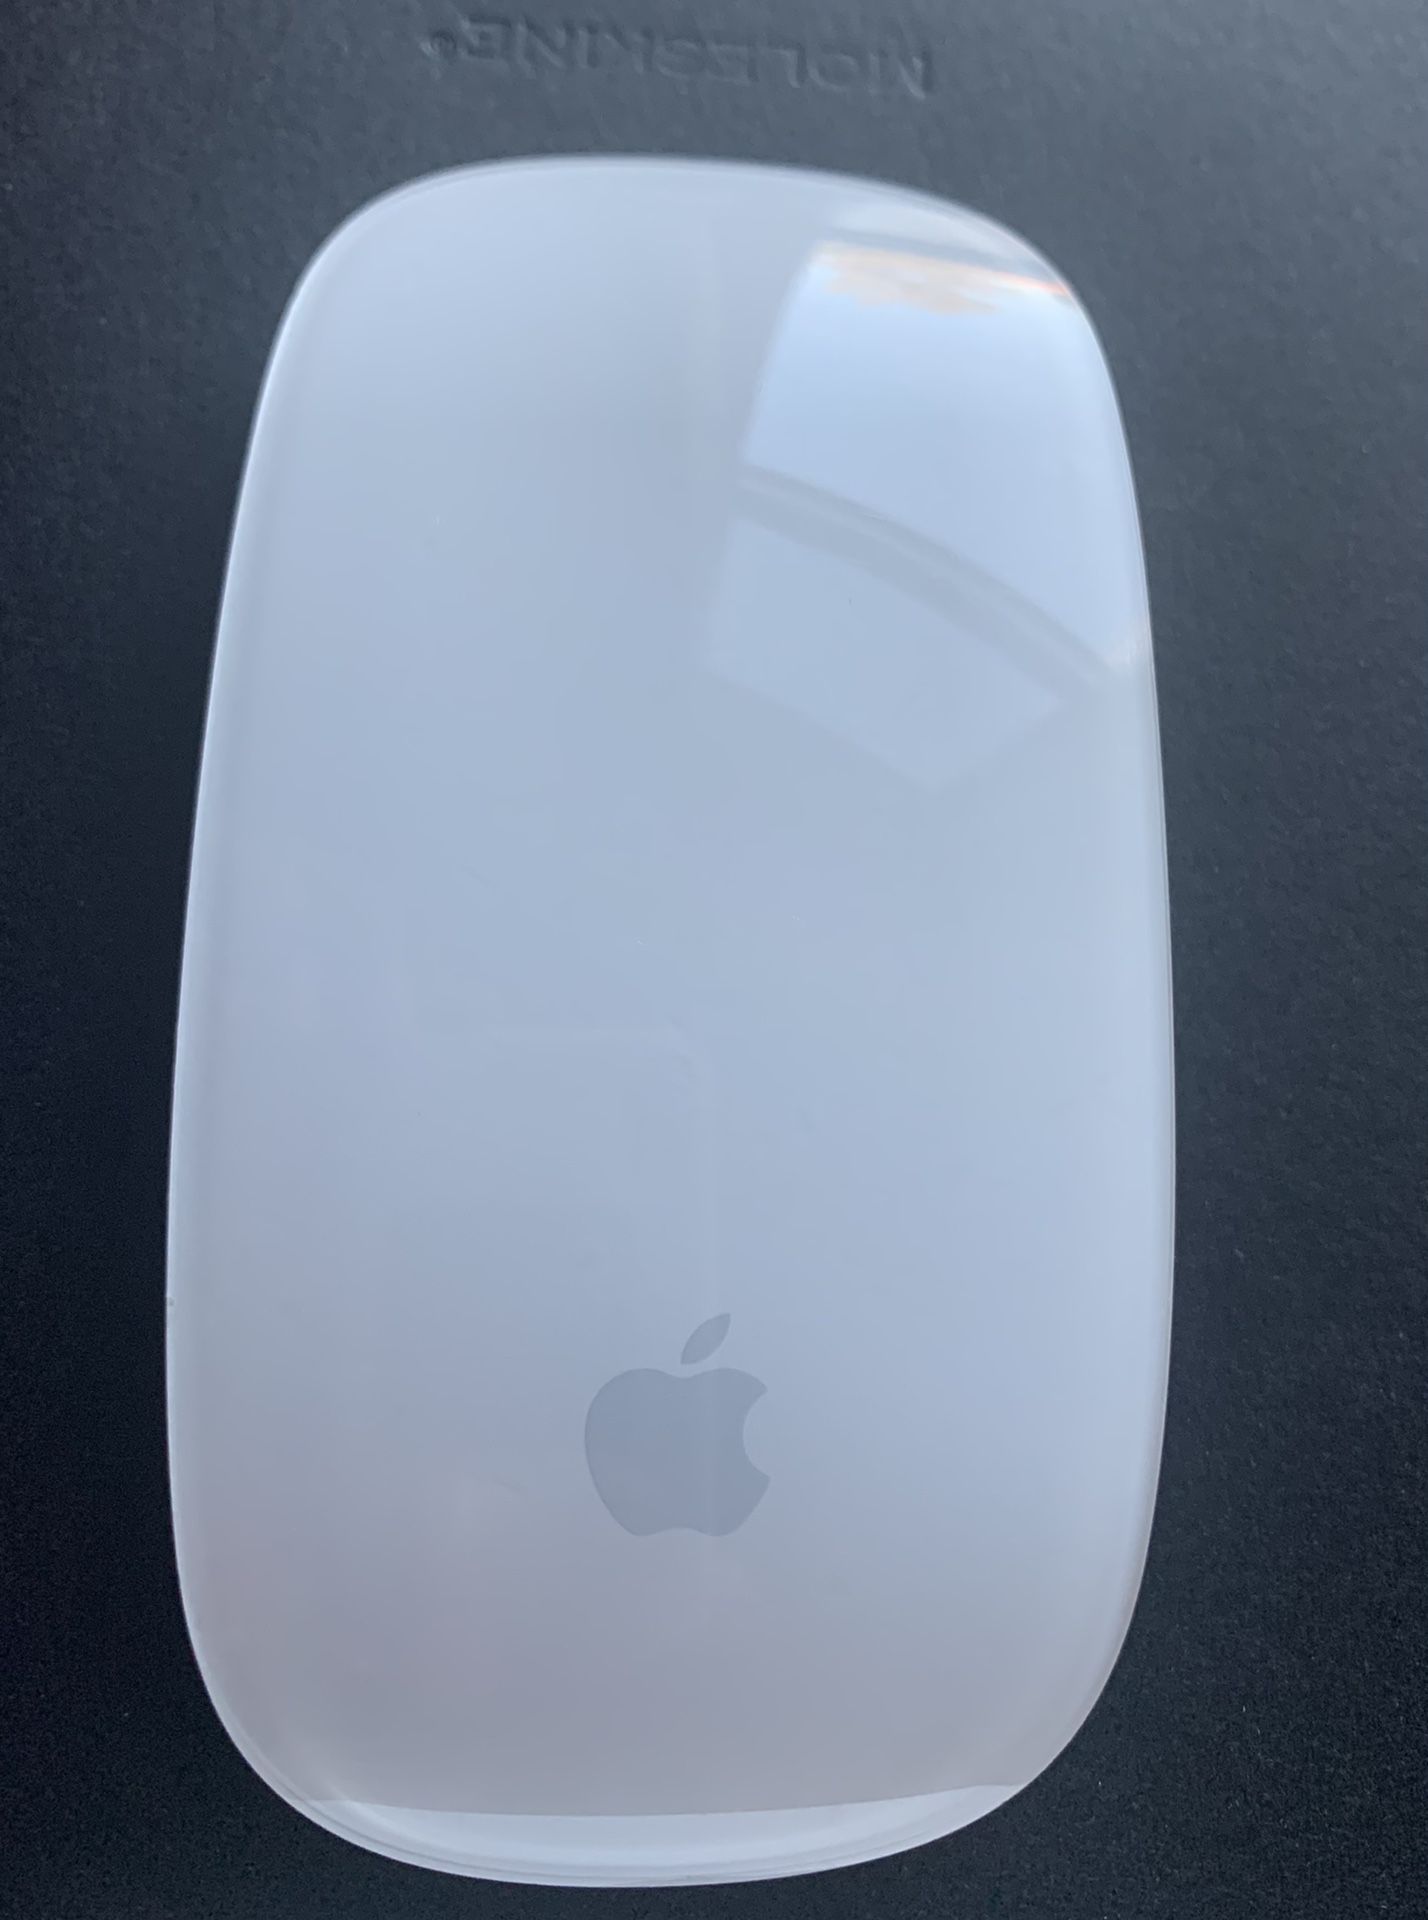 Apple Original Magic Mouse 1 Wireless Mac